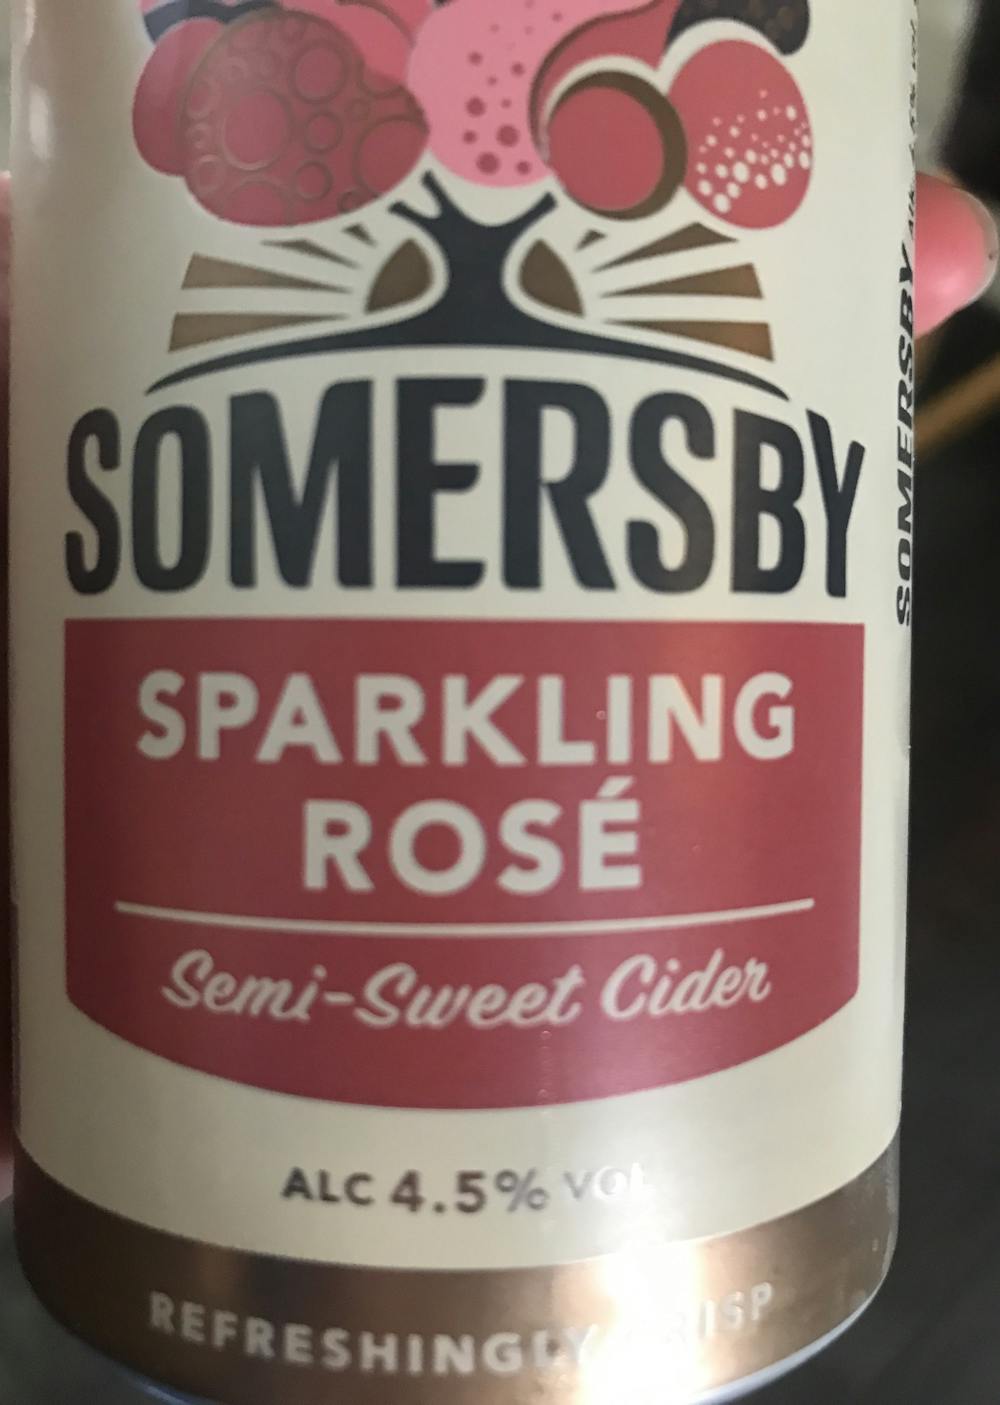 Sparkling rosé 0,33L, Sommersby